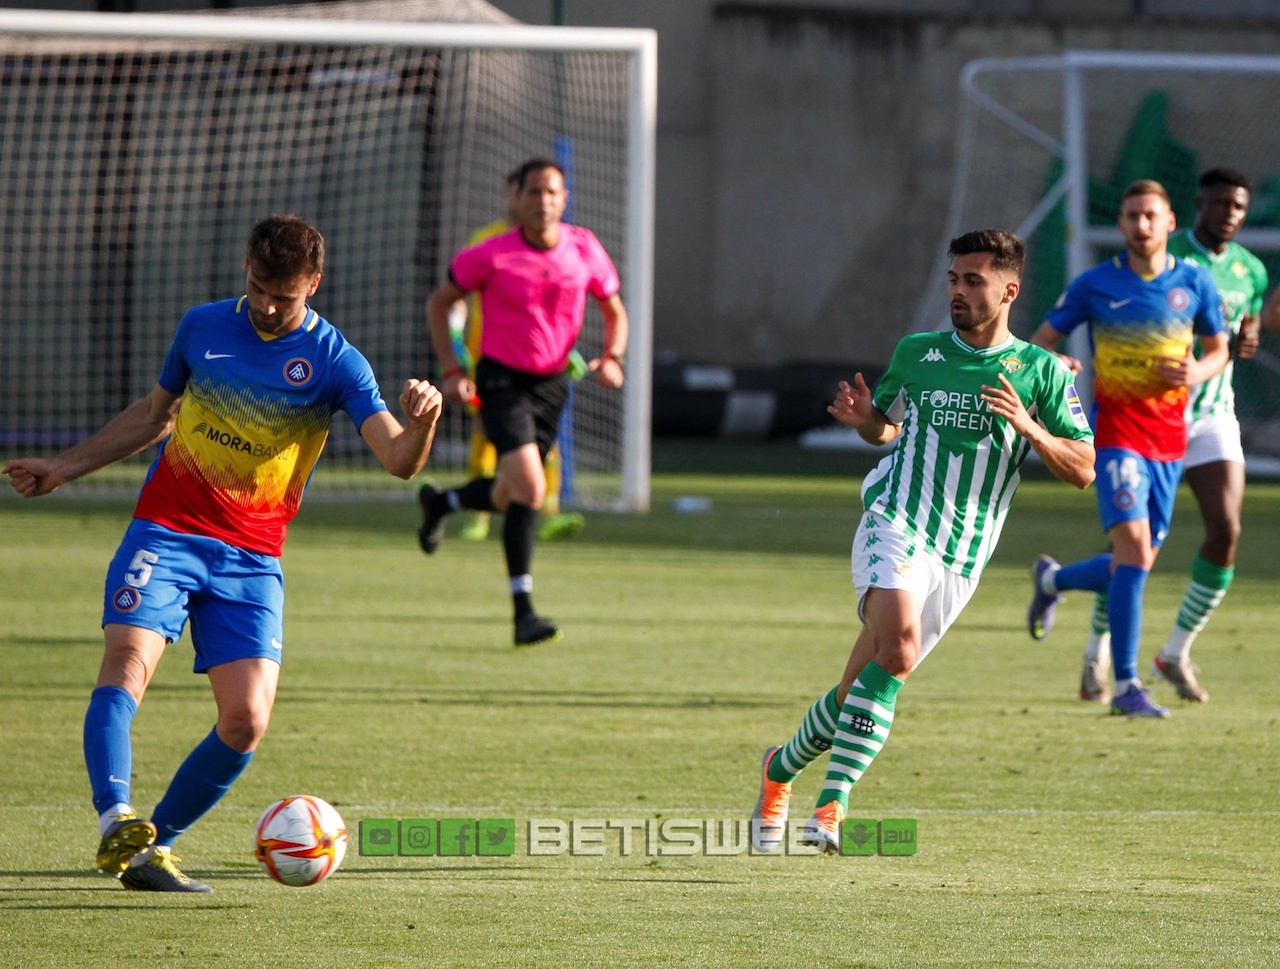 J-34-Betis-Deportivo-vs-FC-Andorra205